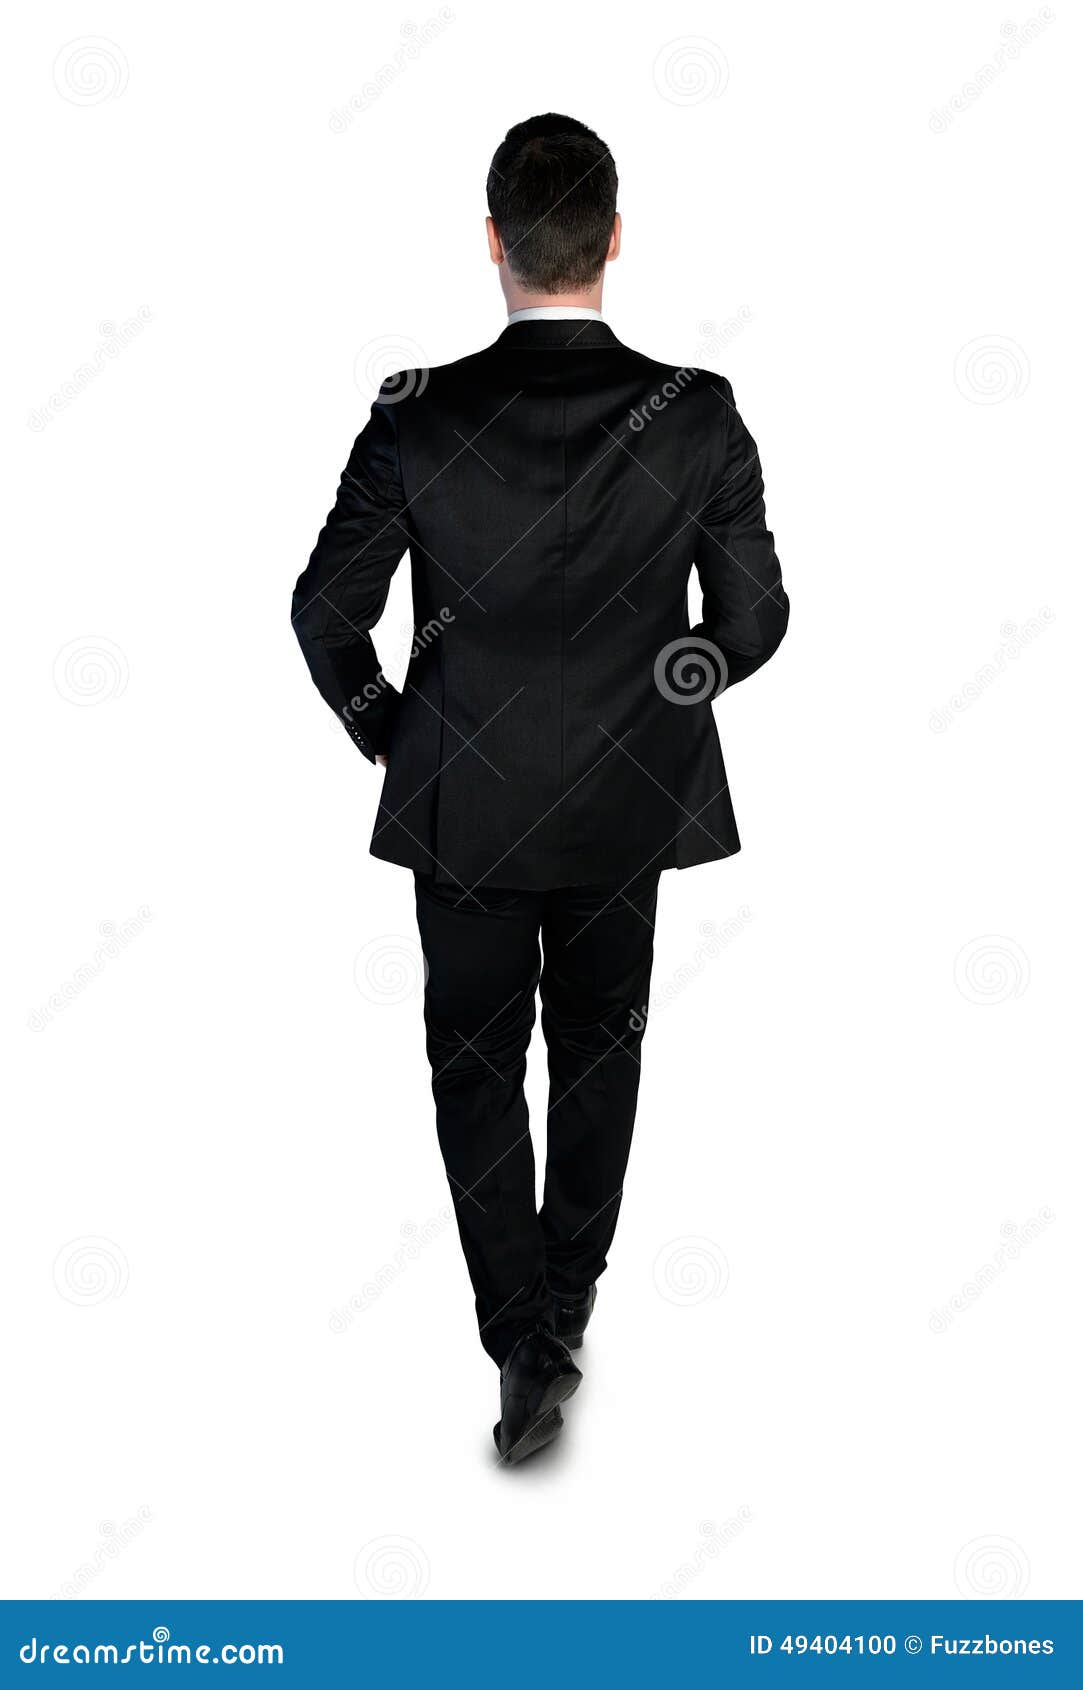 Business man walking stock photo. Image of back, professional - 49404100